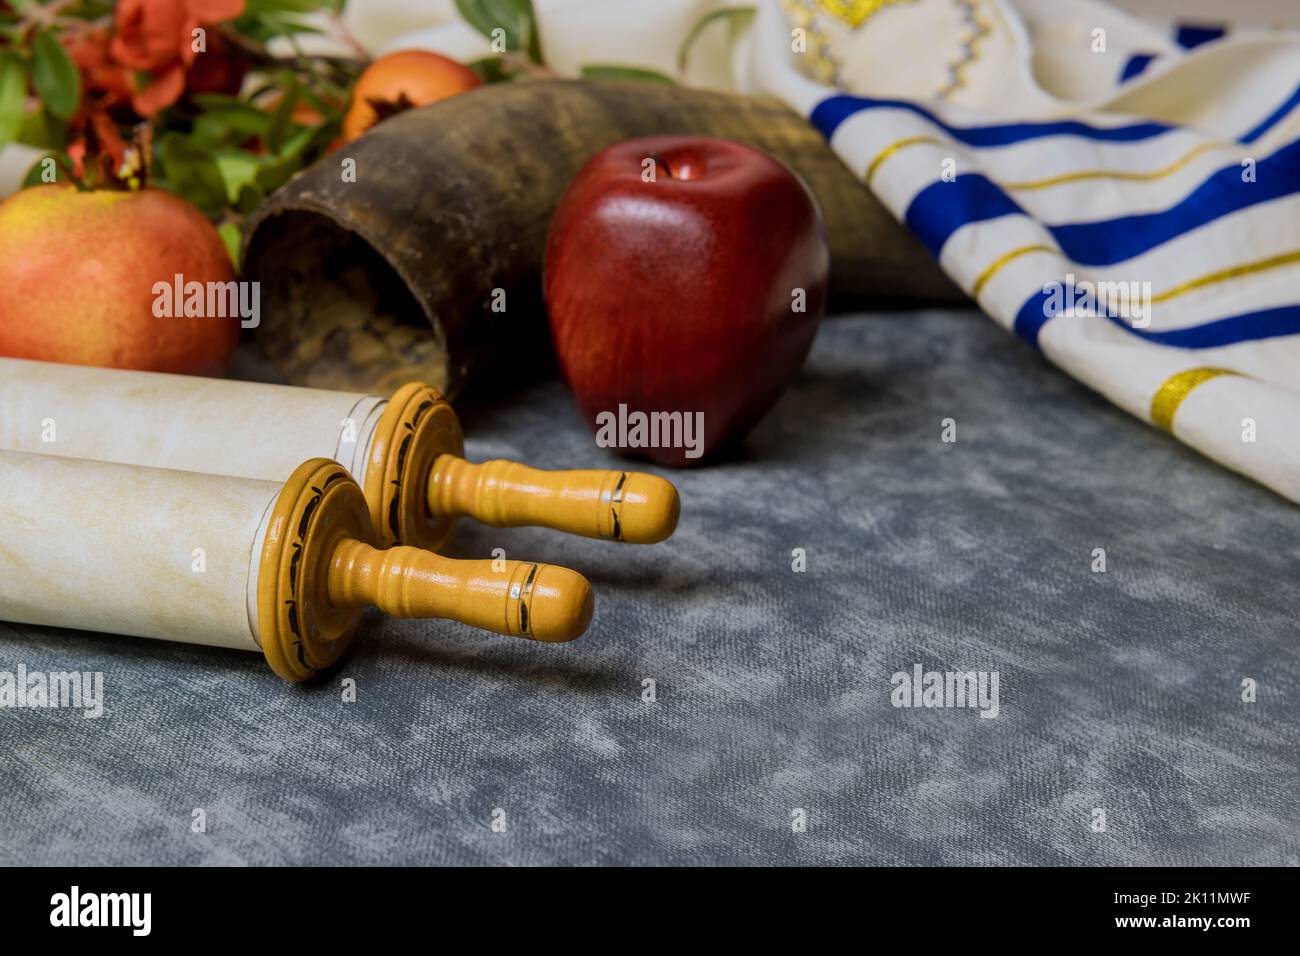 The Orthodox New Year symbols of Rosh Hashanah display a bowl of honey, a shofar, apples, and pomegranates Stock Photo